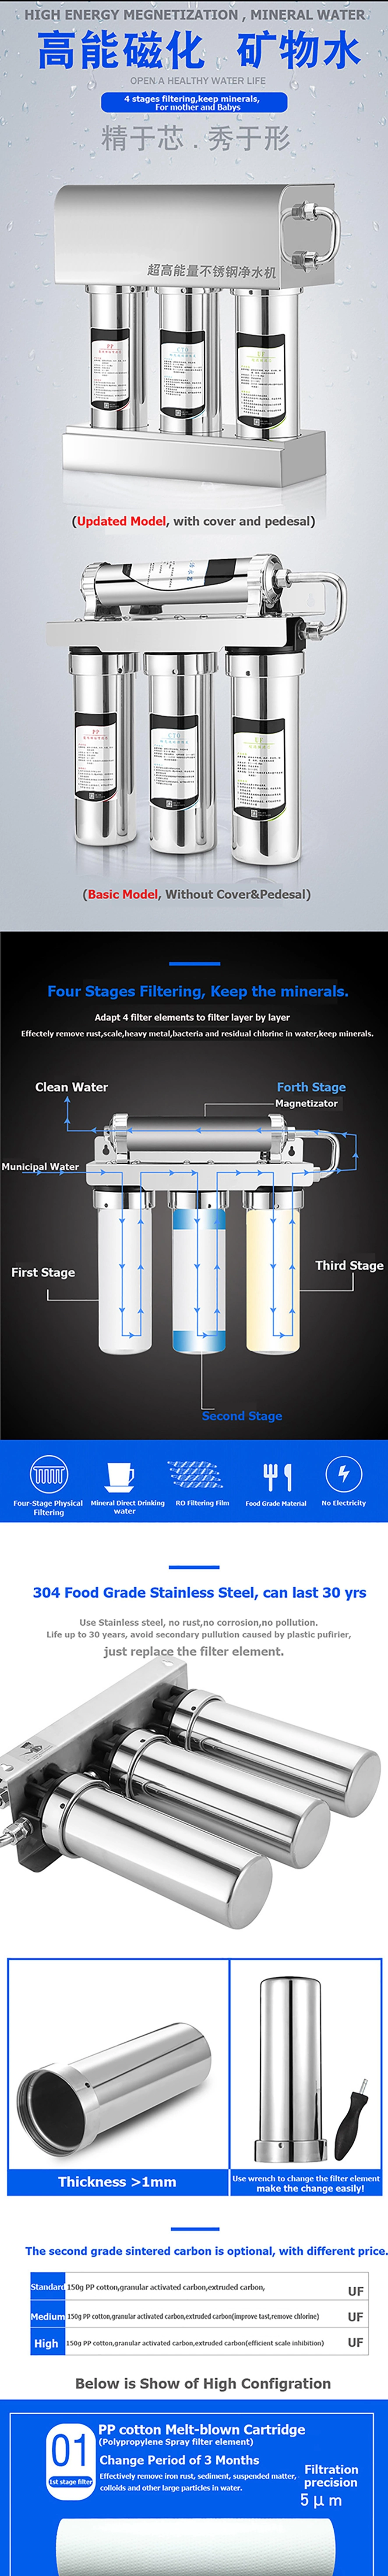 Under-Sink 4 Stage UF Water Purifier Stainless Steel Water Filter